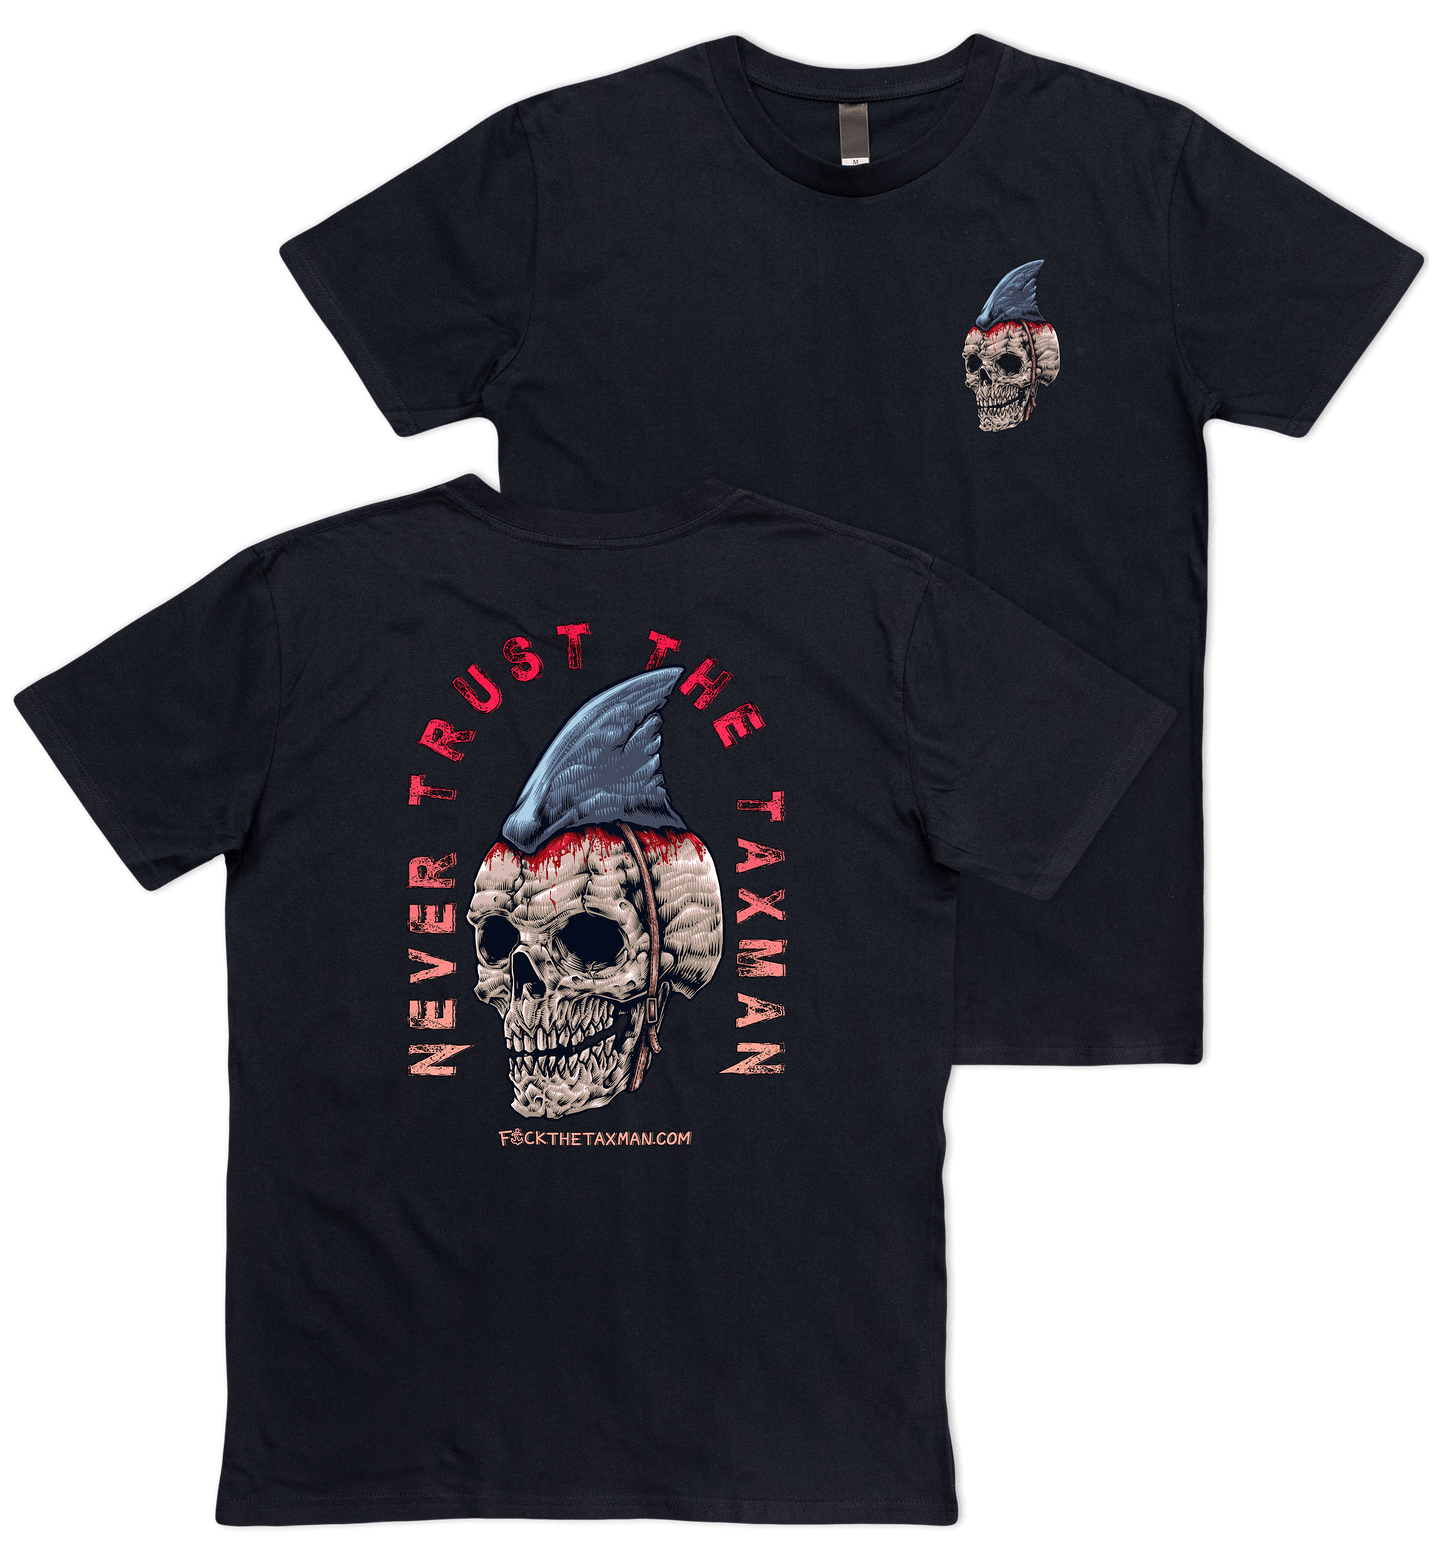 Fishing T-shirt skull with shark fin on head. Black T-shirt, text never trust the taxman. Skull and shark fin